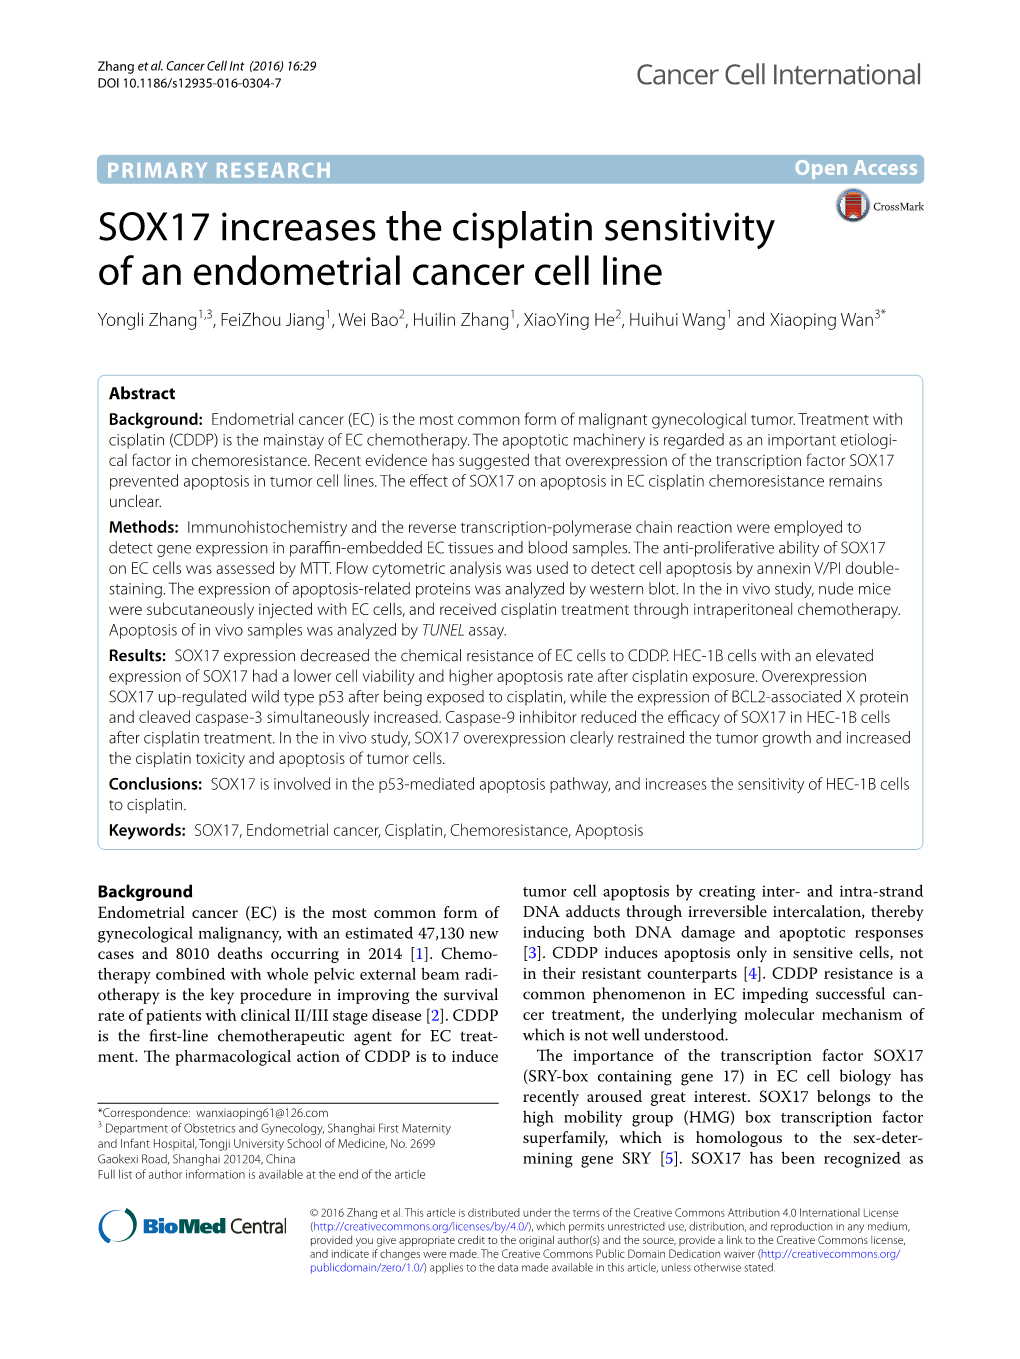 SOX17 Increases the Cisplatin Sensitivity of an Endometrial Cancer